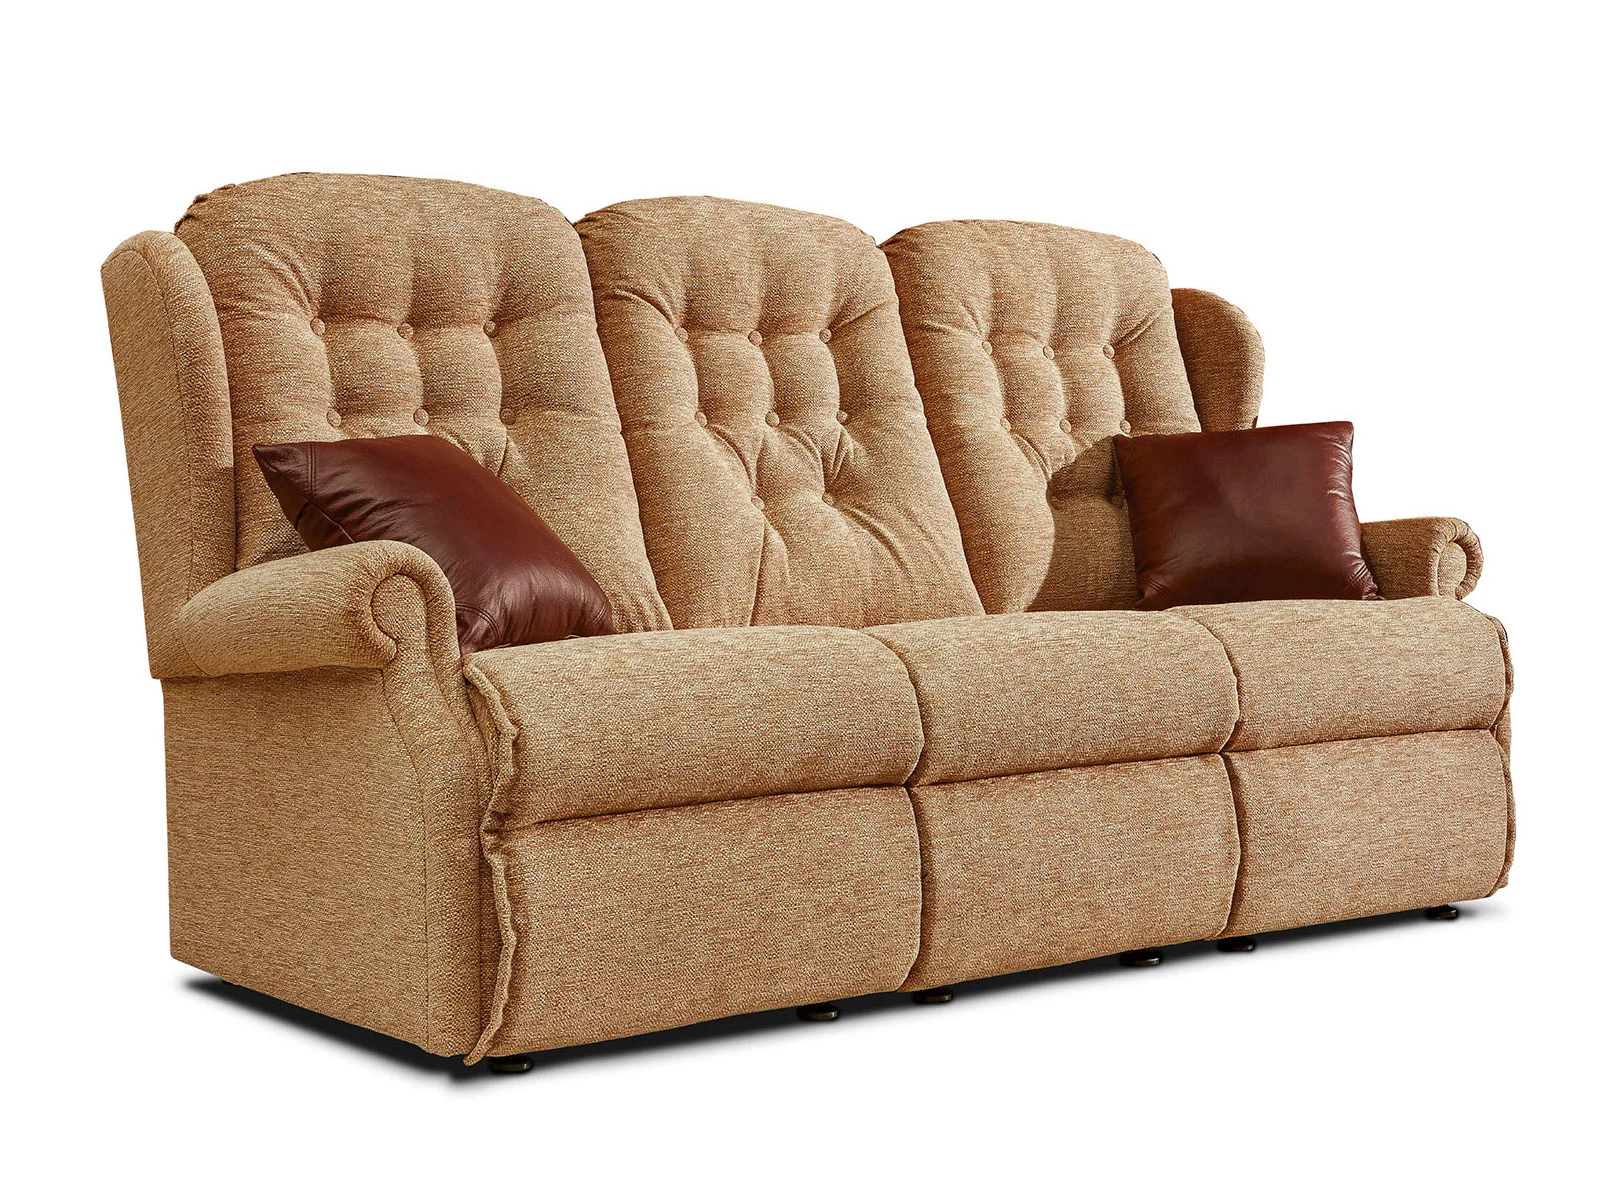 Standard Fixed 3 Seater Sofa